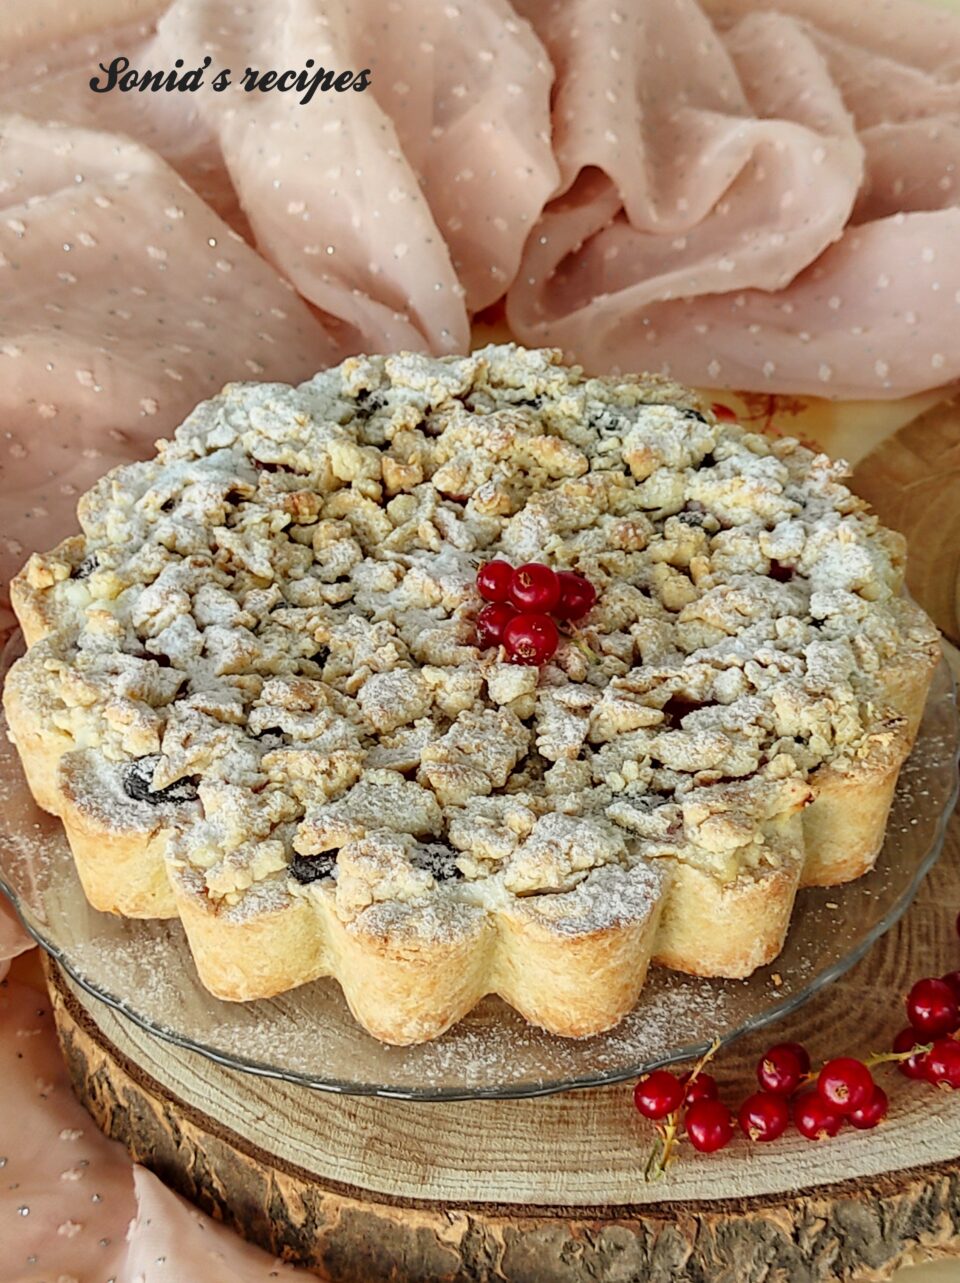 Crumb tart with berries